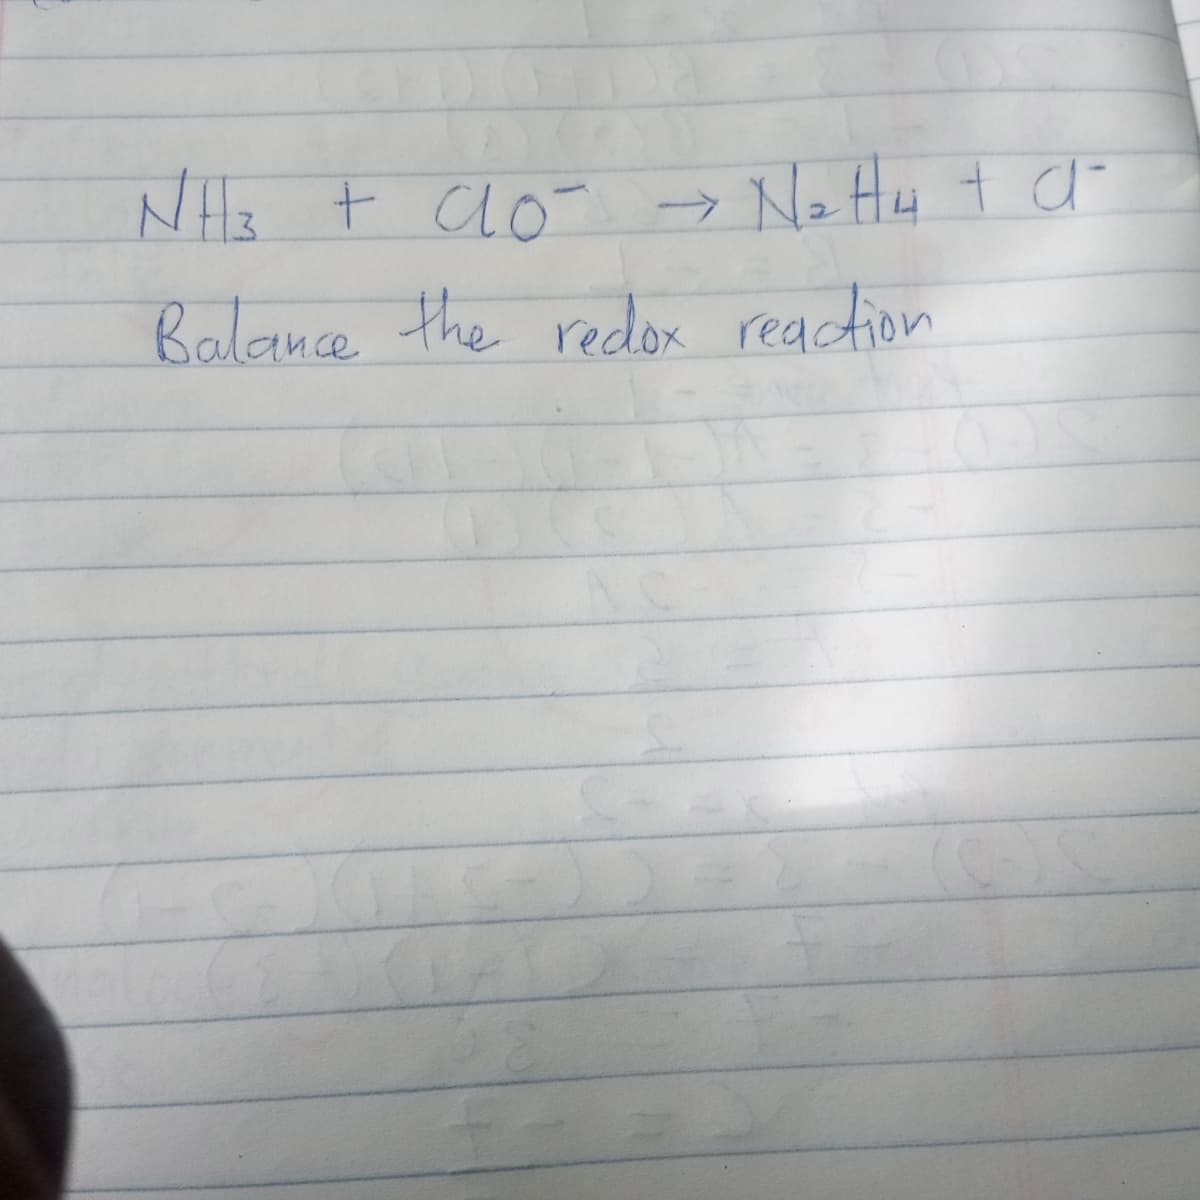 N t Clo
→ Ne Hy t a
->
Balance the redox reaction
